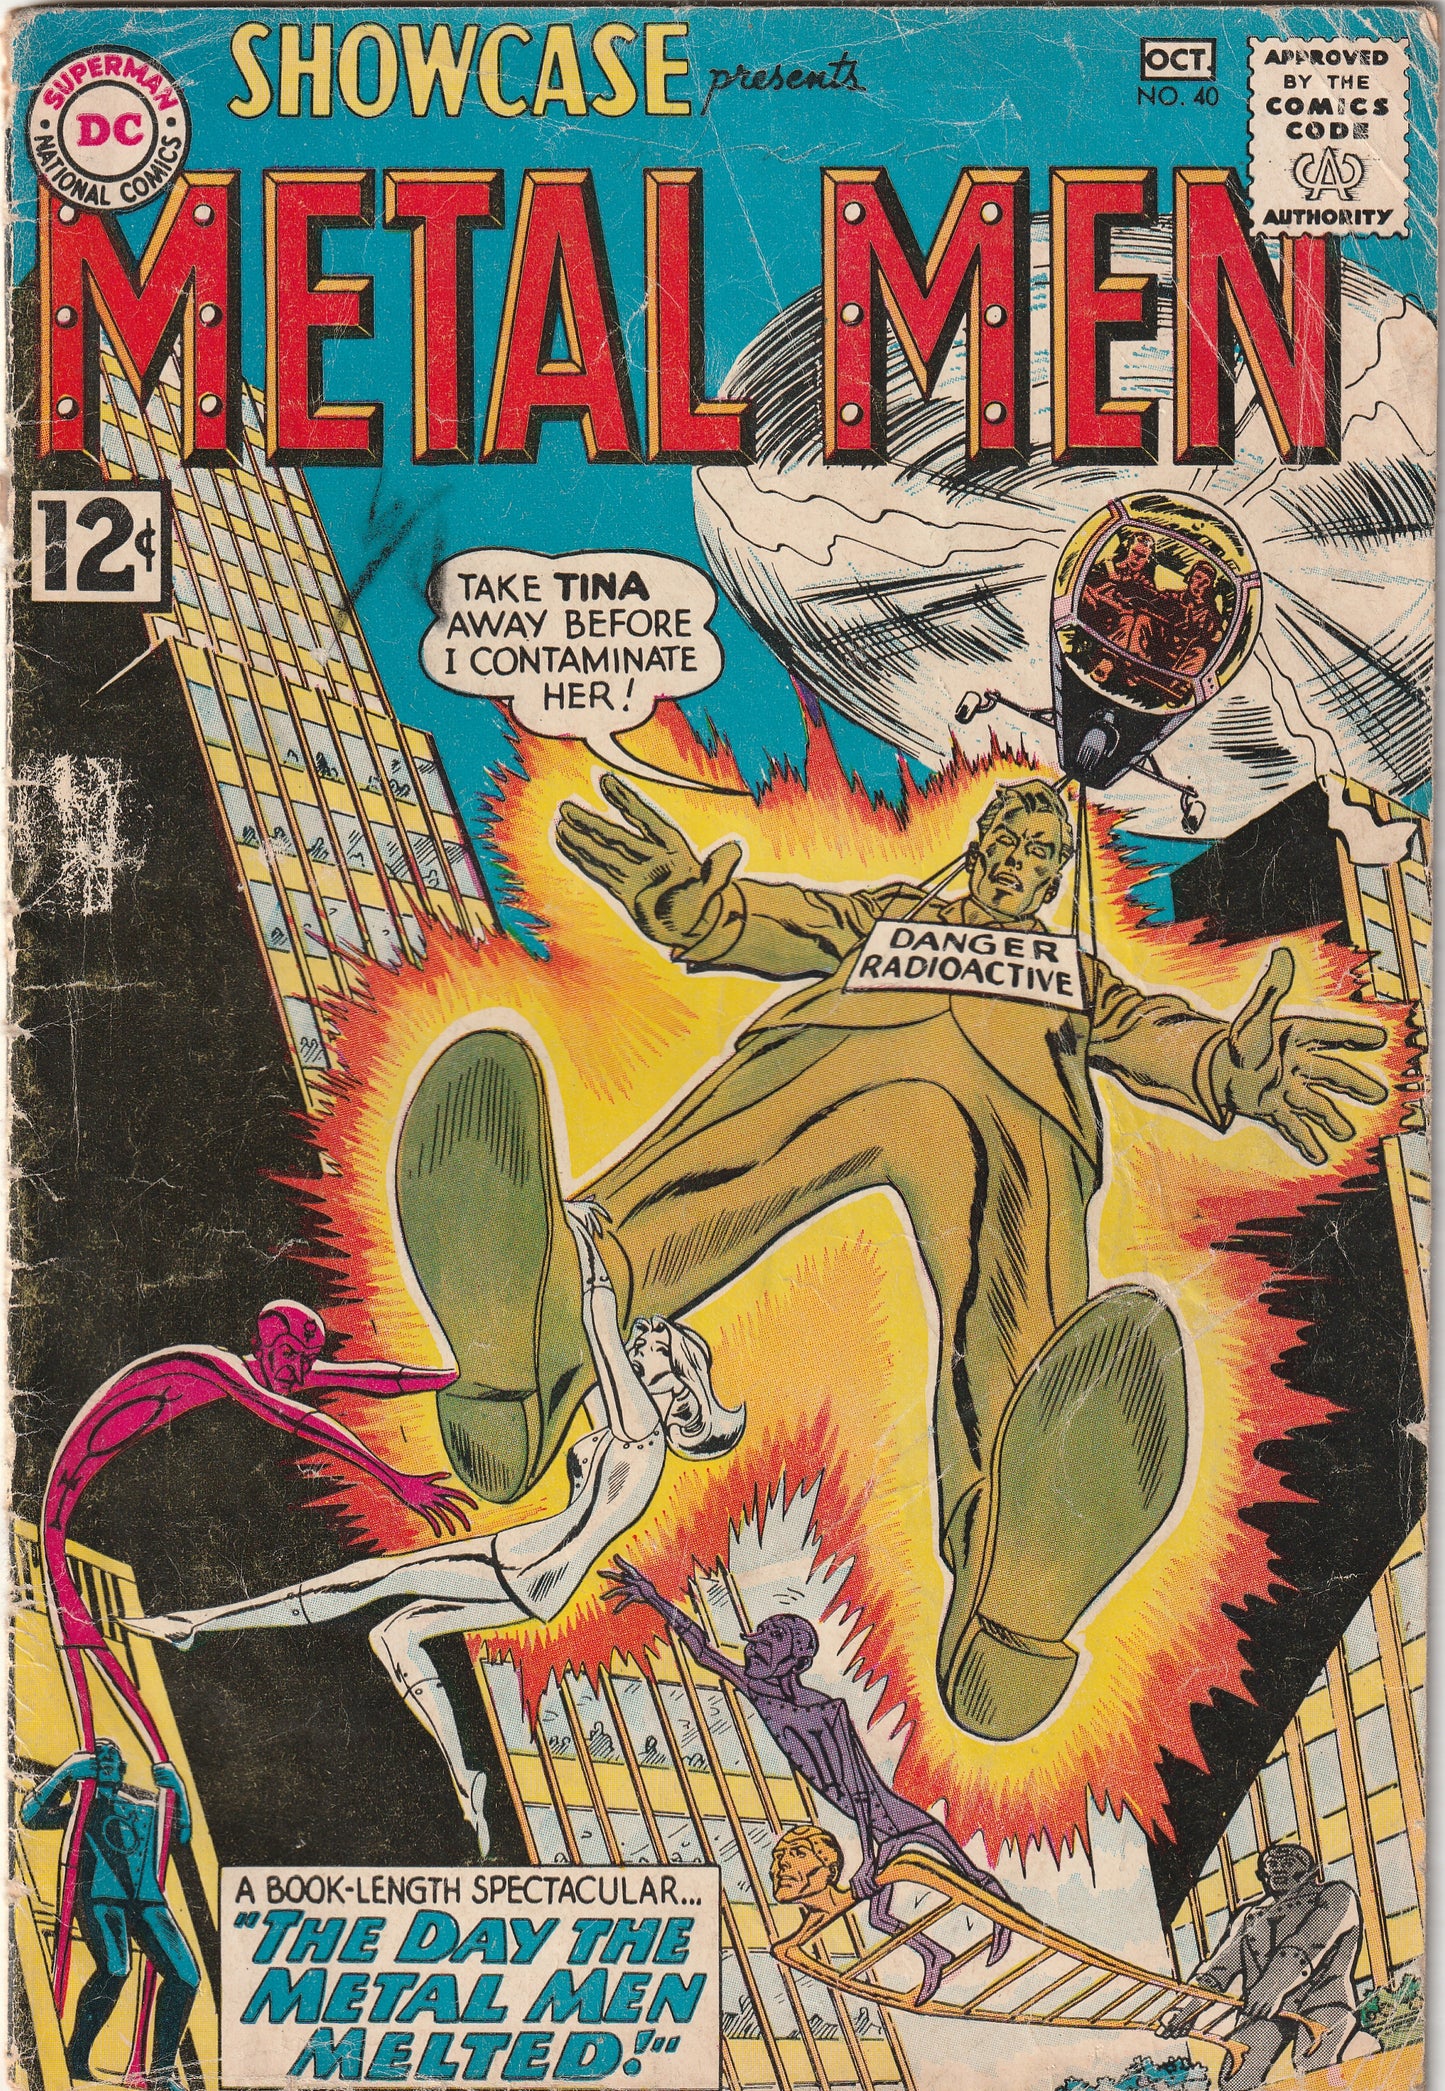 Showcase #40 (1962) - Presents Metal Men (4th appearance)